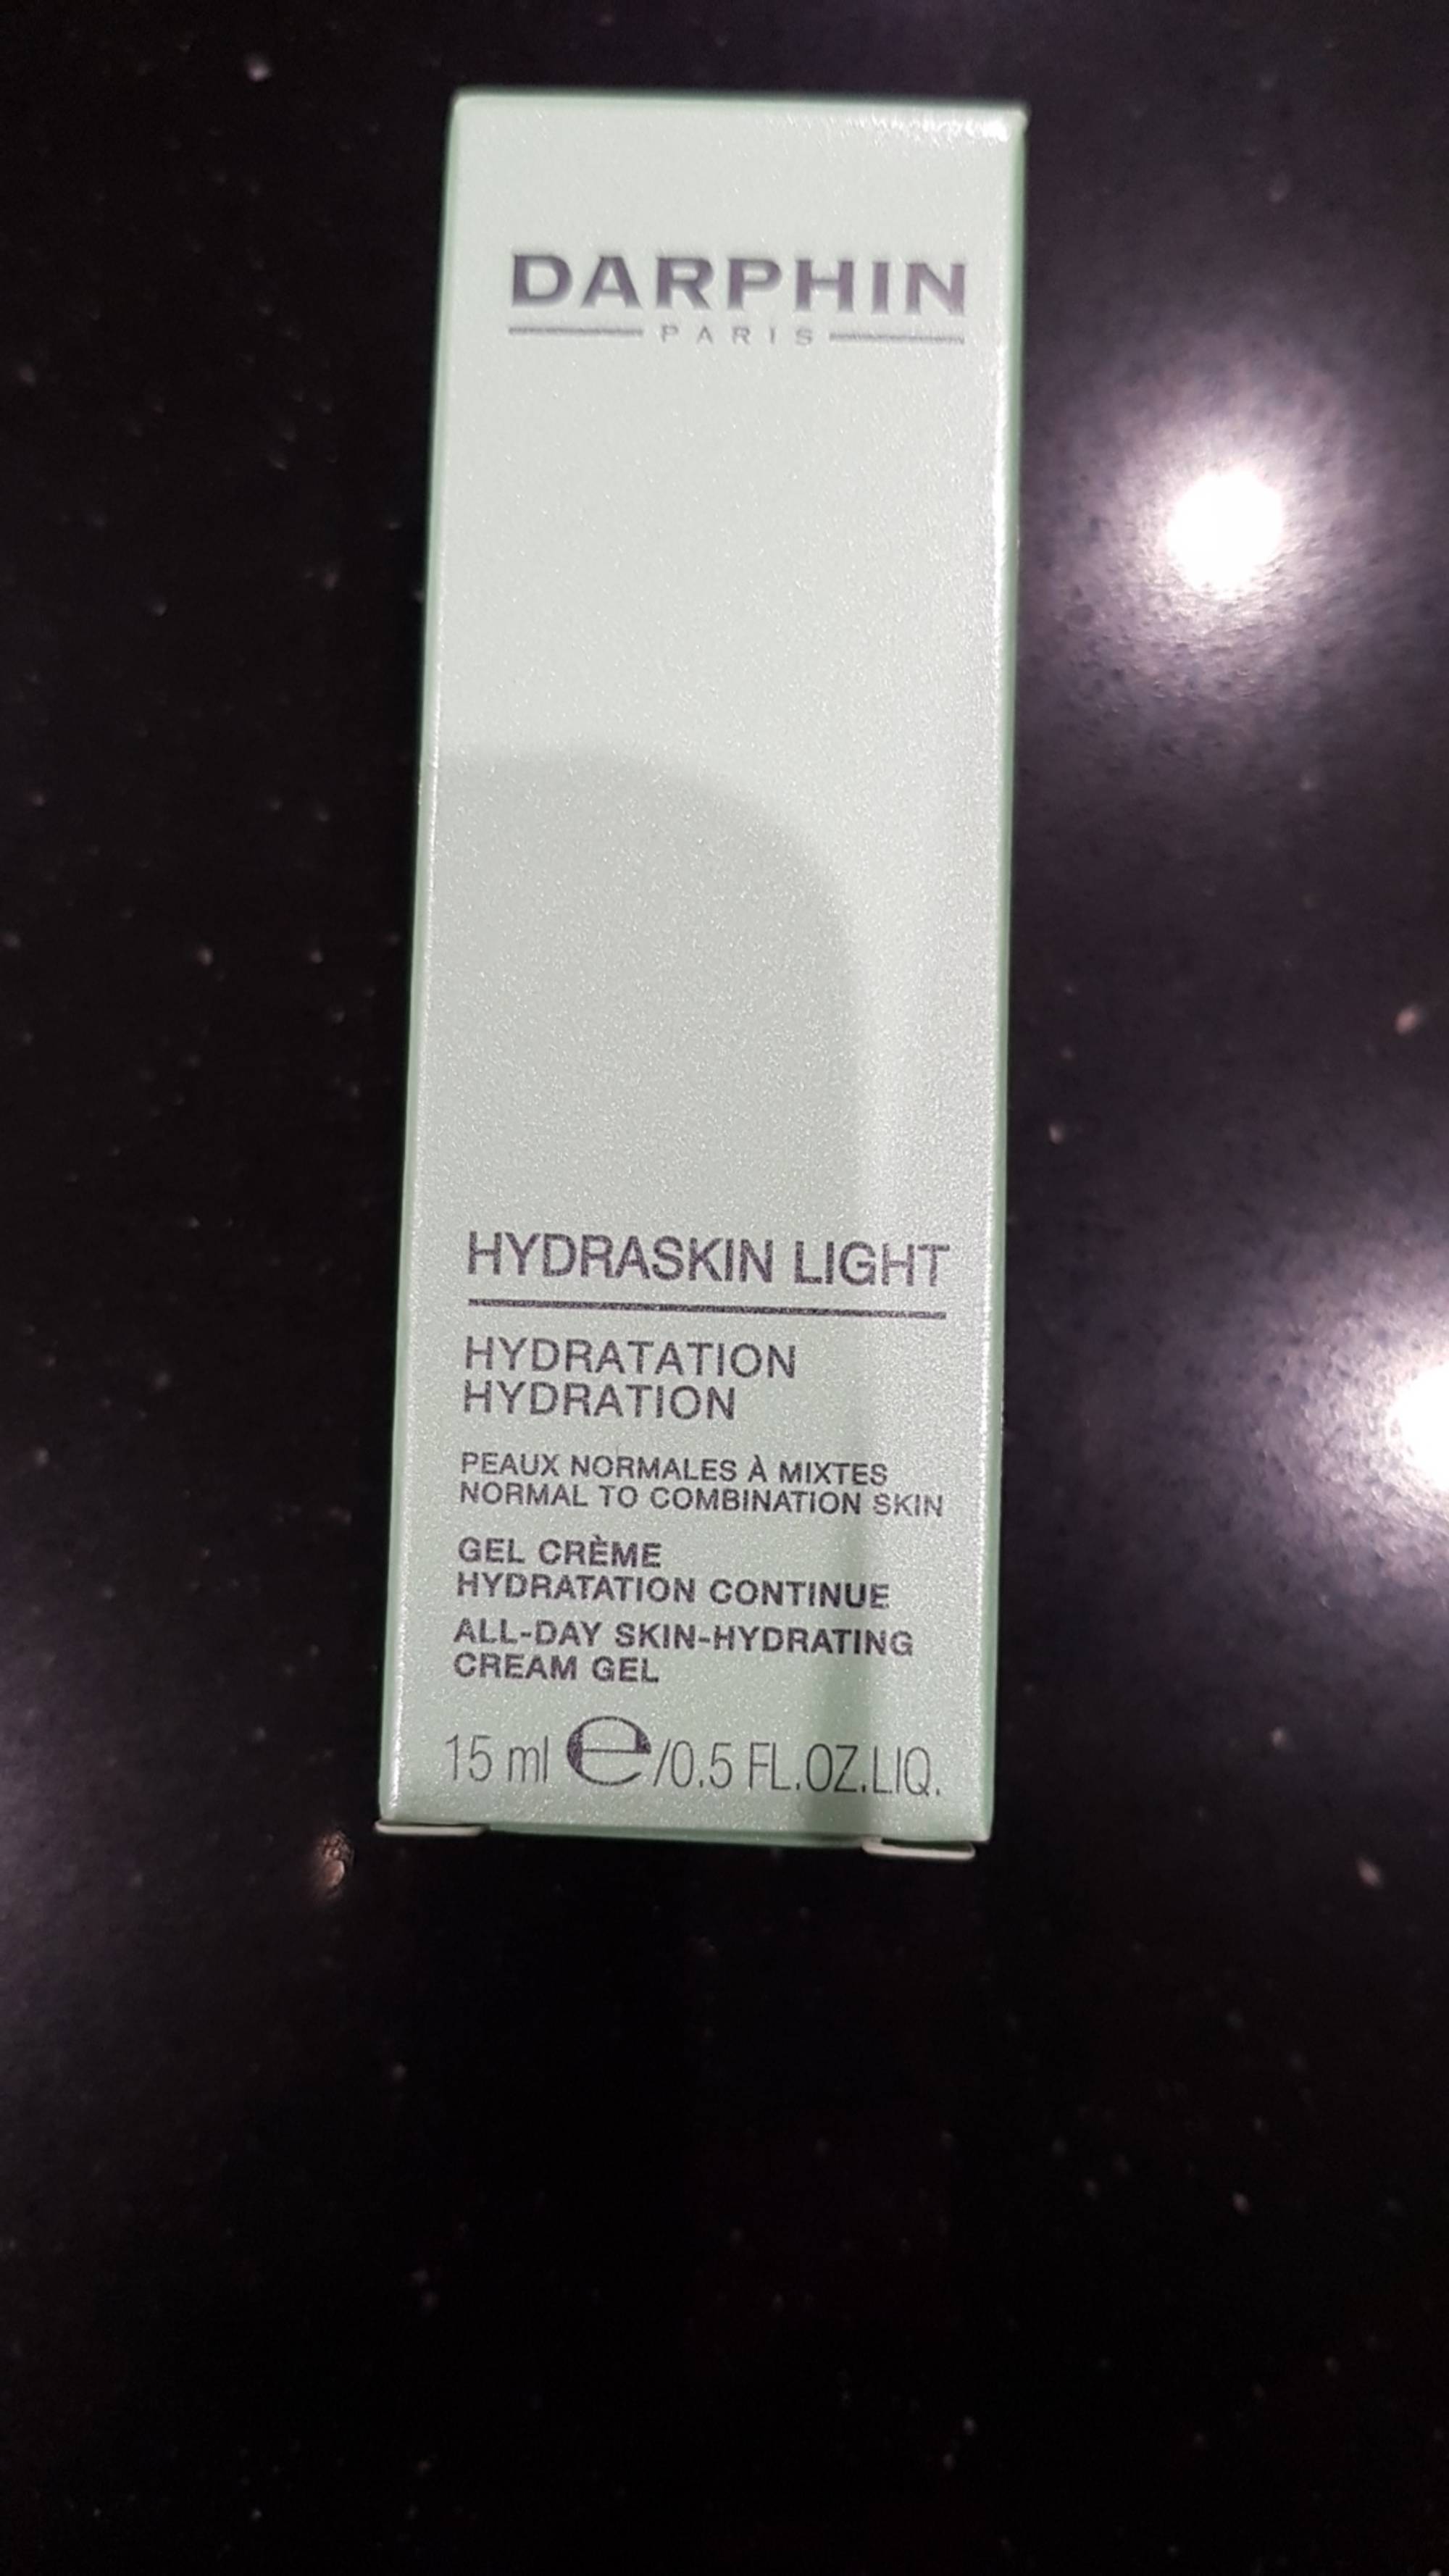 DARPHIN - Hydraskin light - Gel crème hydratation continue